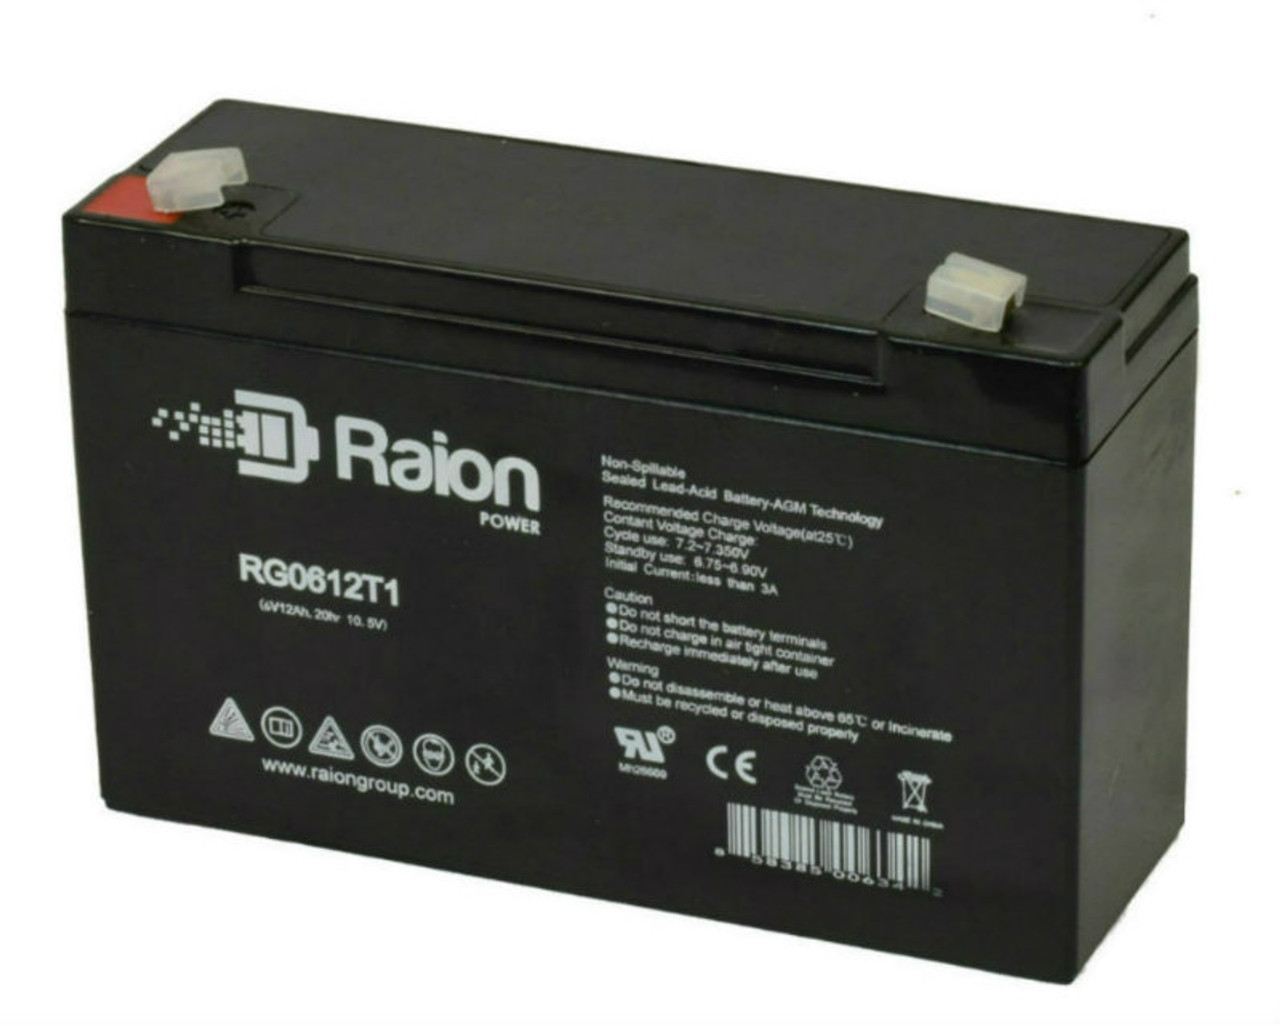 Raion Power RG06120T1 Replacement 6V 12Ah Emergency Light Battery for Light Alarms TBRC1